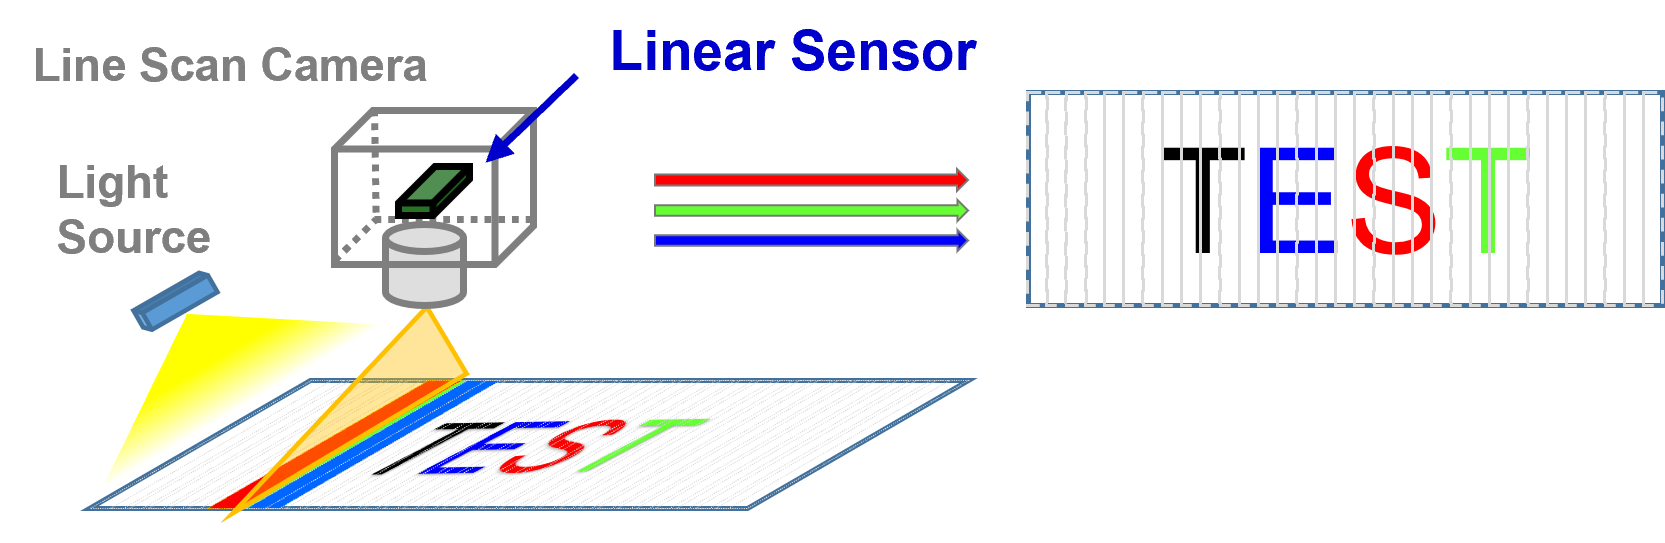 Linear Sensor